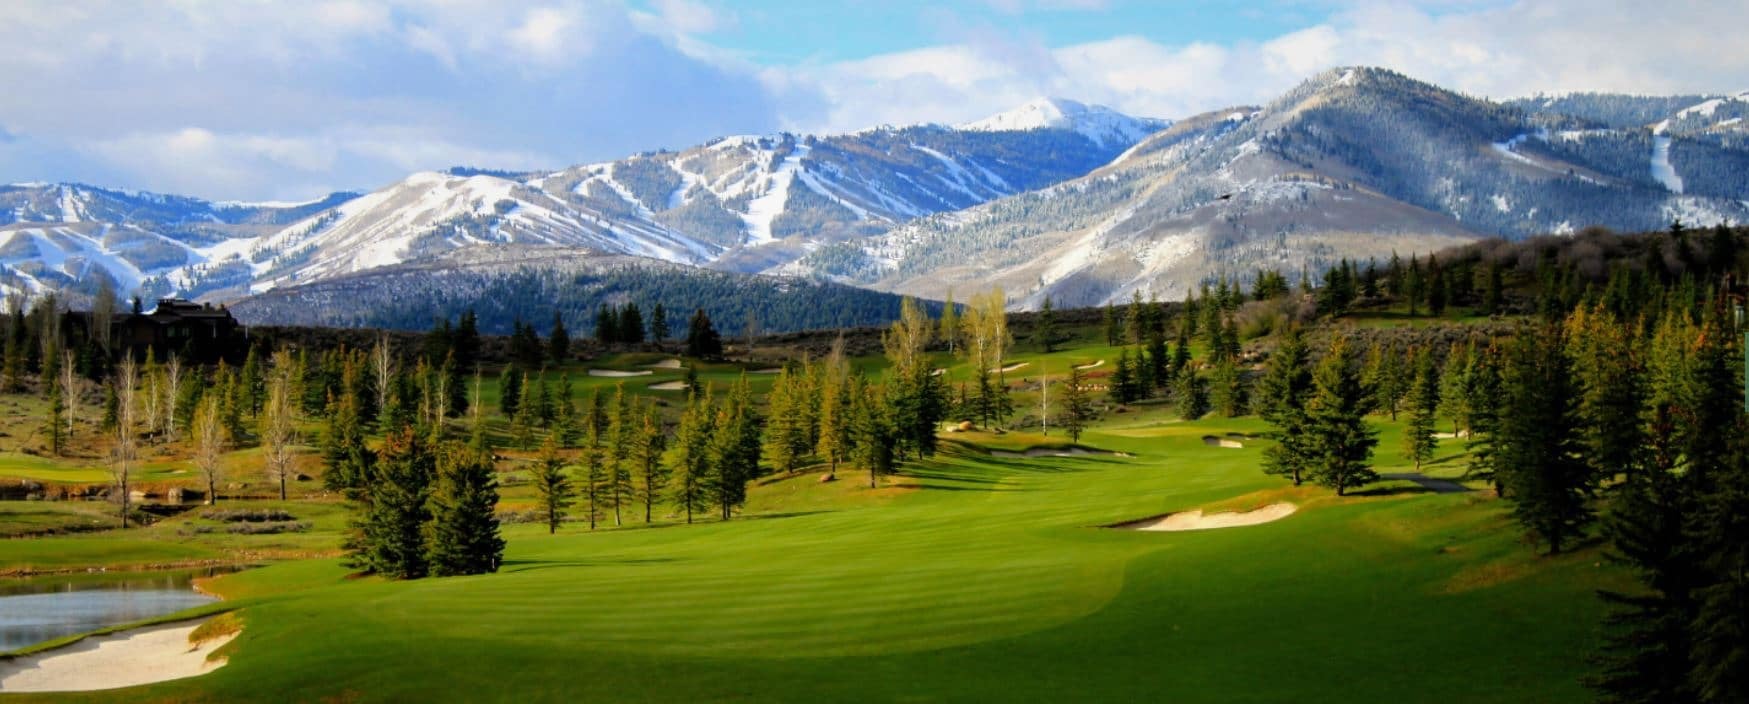 Golf Course Real Estate for Sale Park City Utah